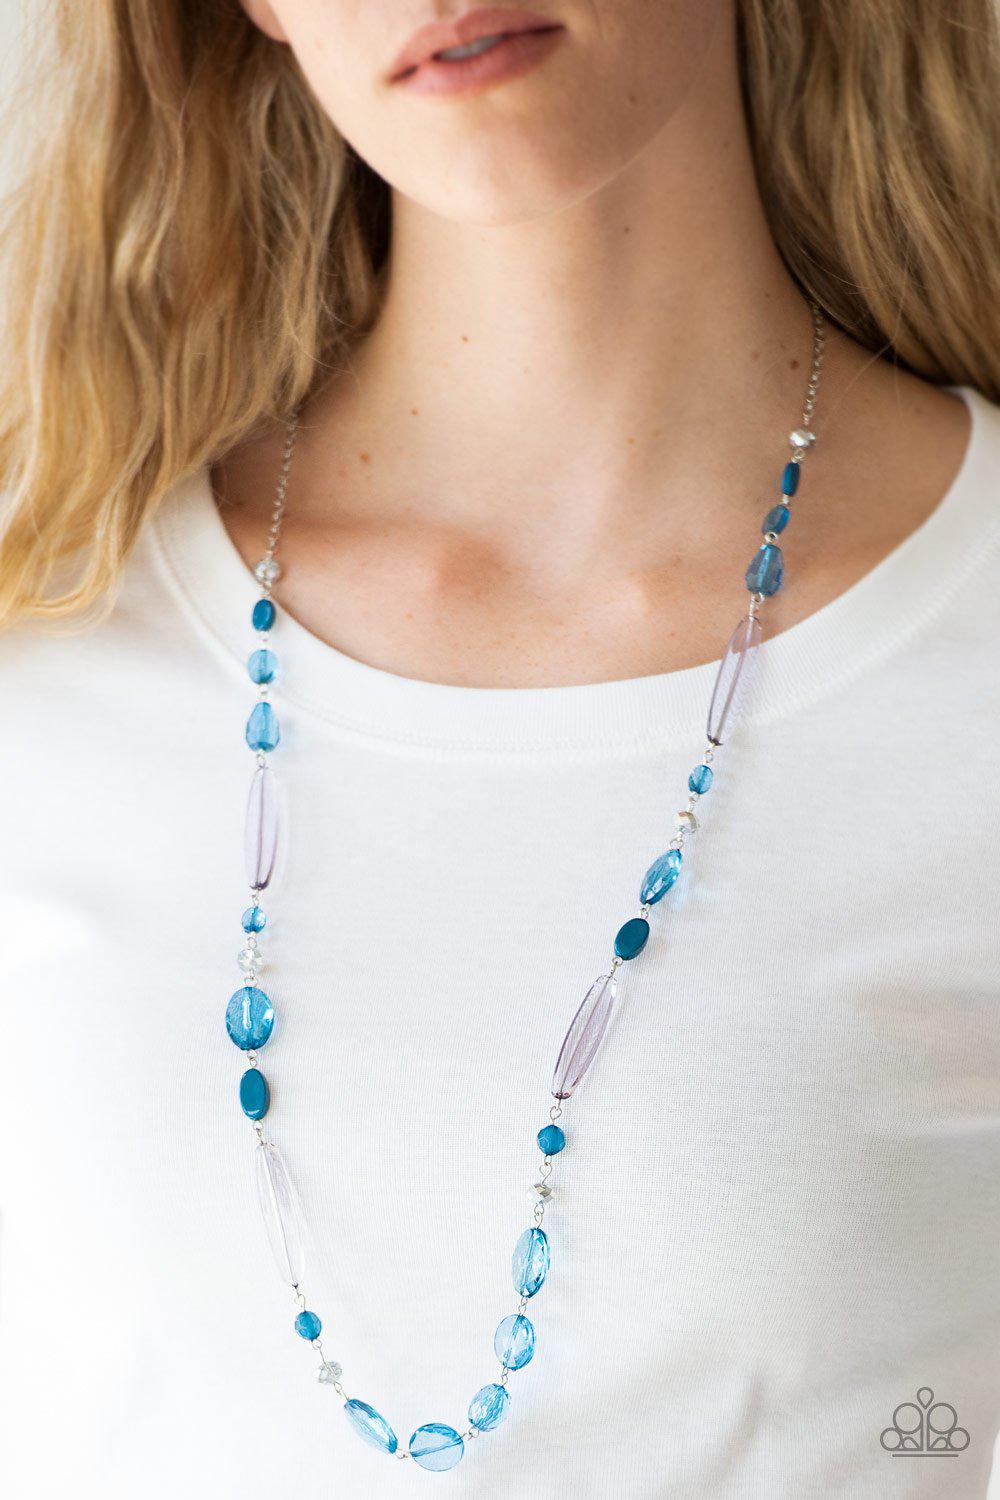 Quite Quintessence Blue Necklace - Paparazzi Accessories-CarasShop.com - $5 Jewelry by Cara Jewels